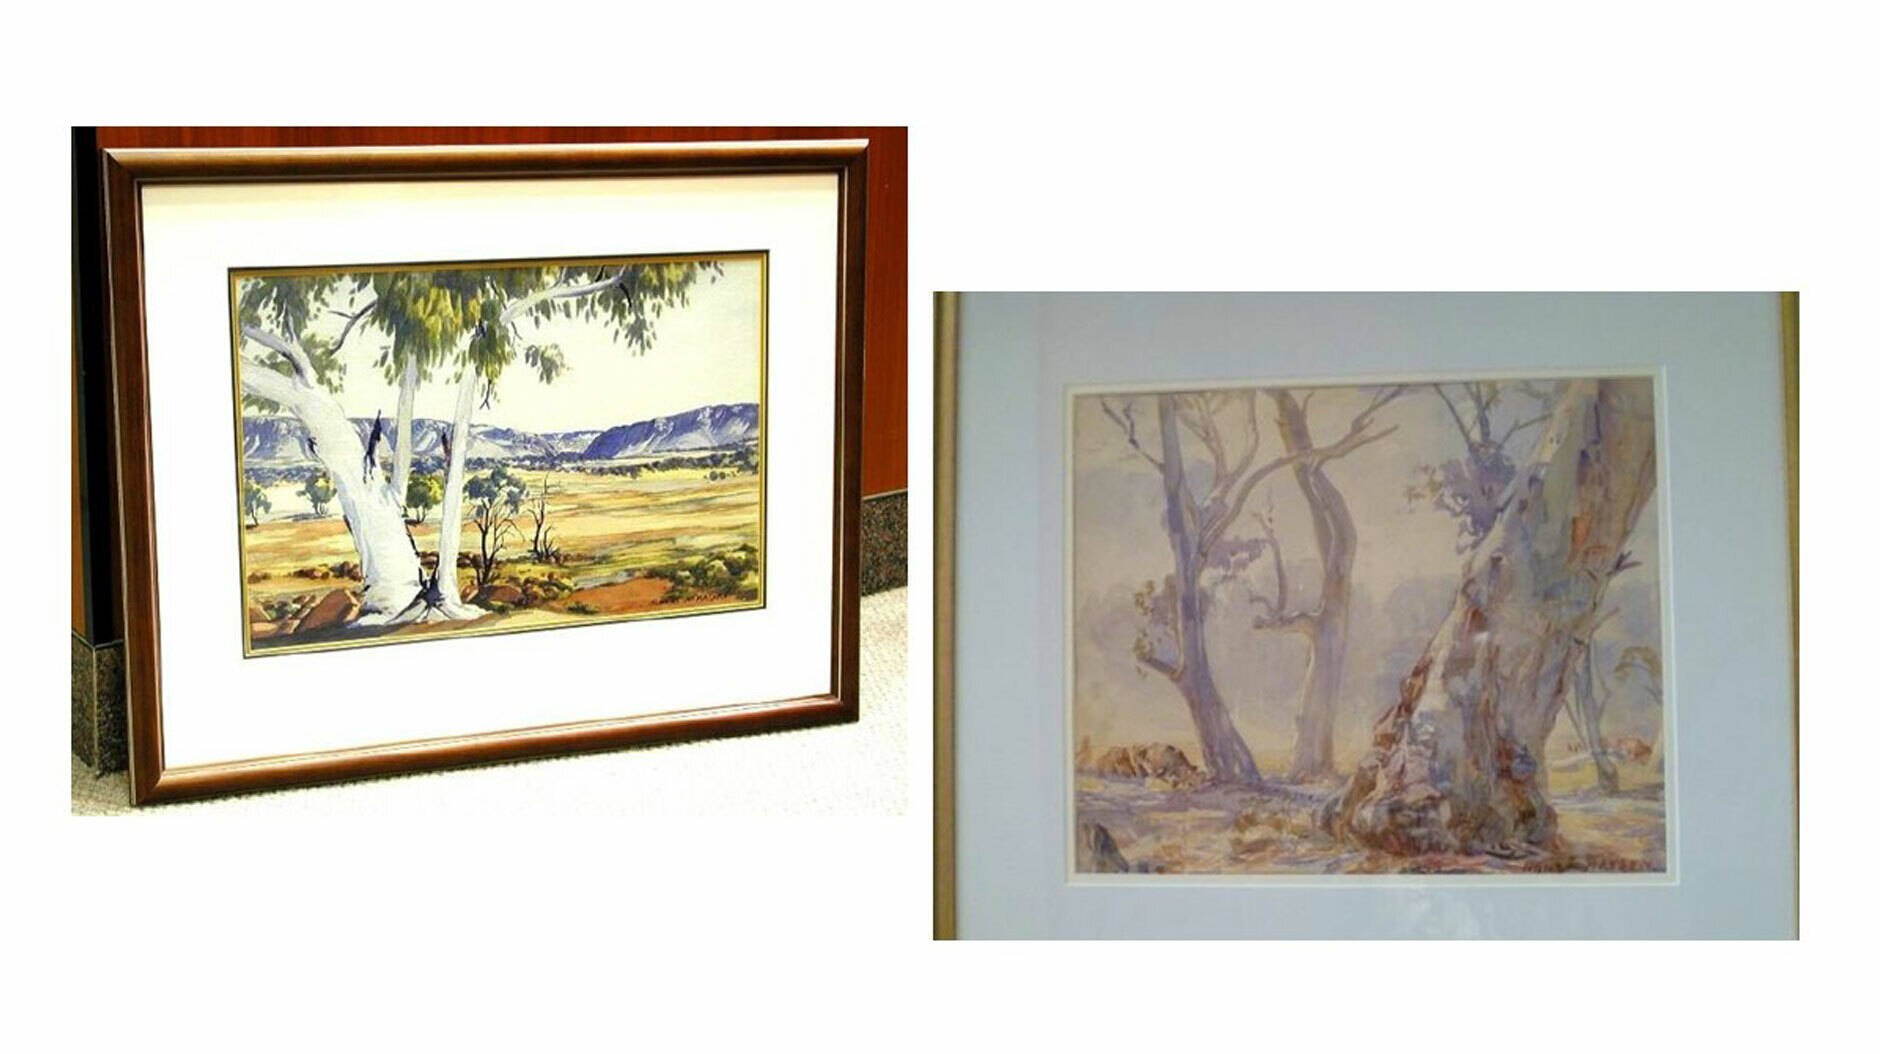 Image Photo — Albert Namatjira – McDonnell Ranges at Heavitree Gap (left) and Hans Heysen – Summer Light (right).